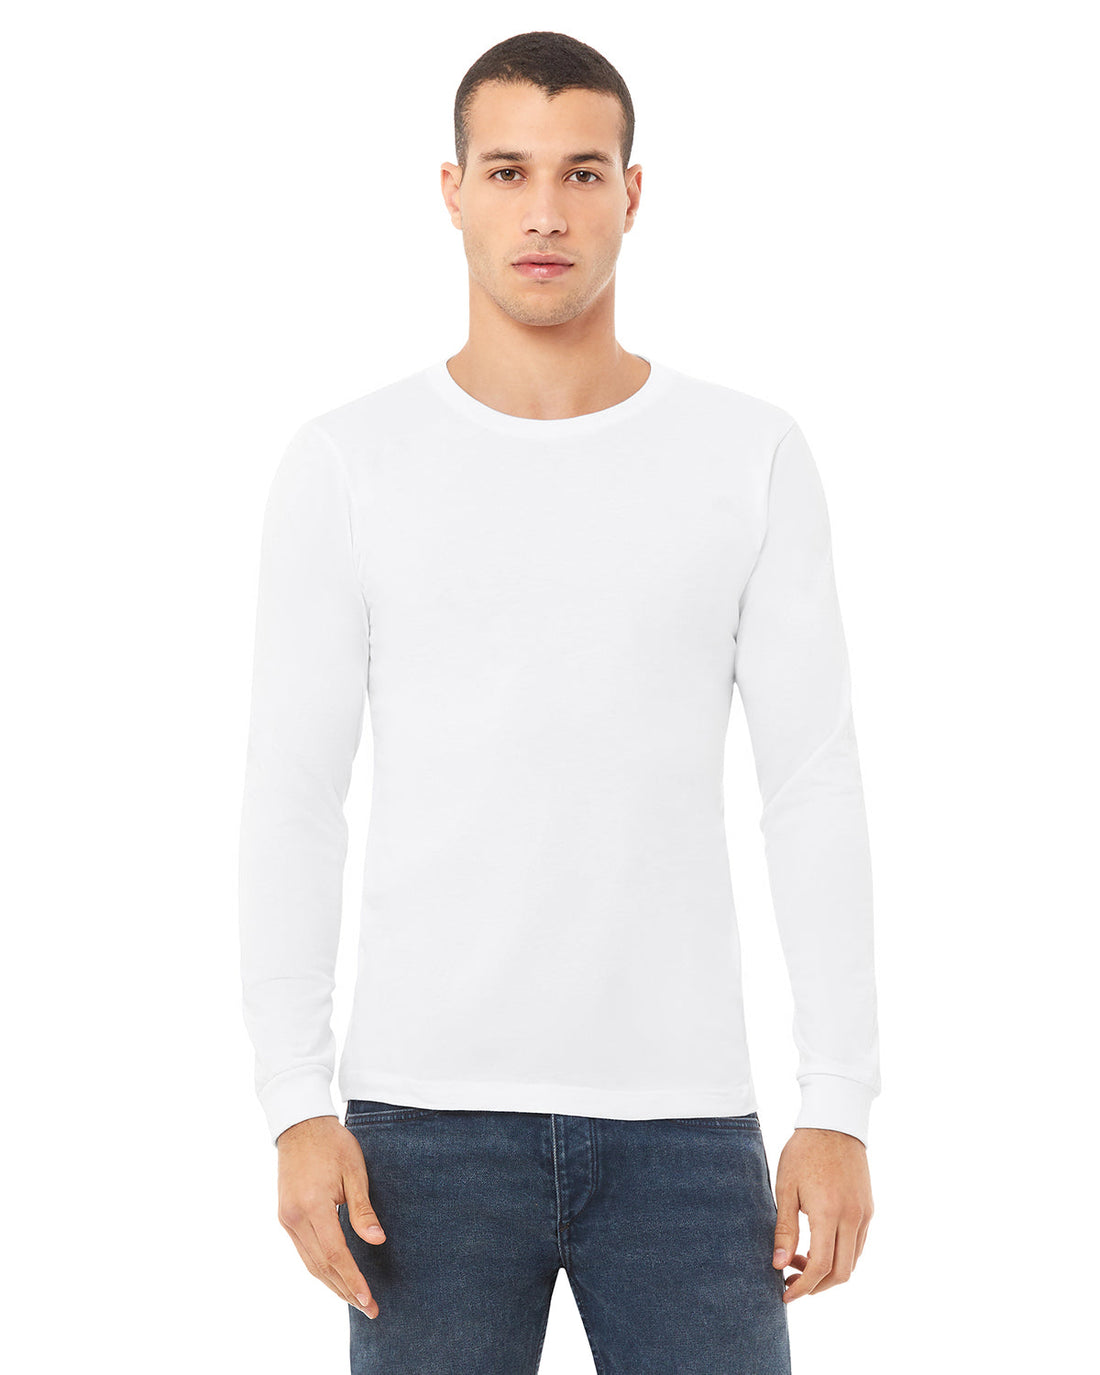 RBA Design Adult Unisex Long Sleeve Shirt